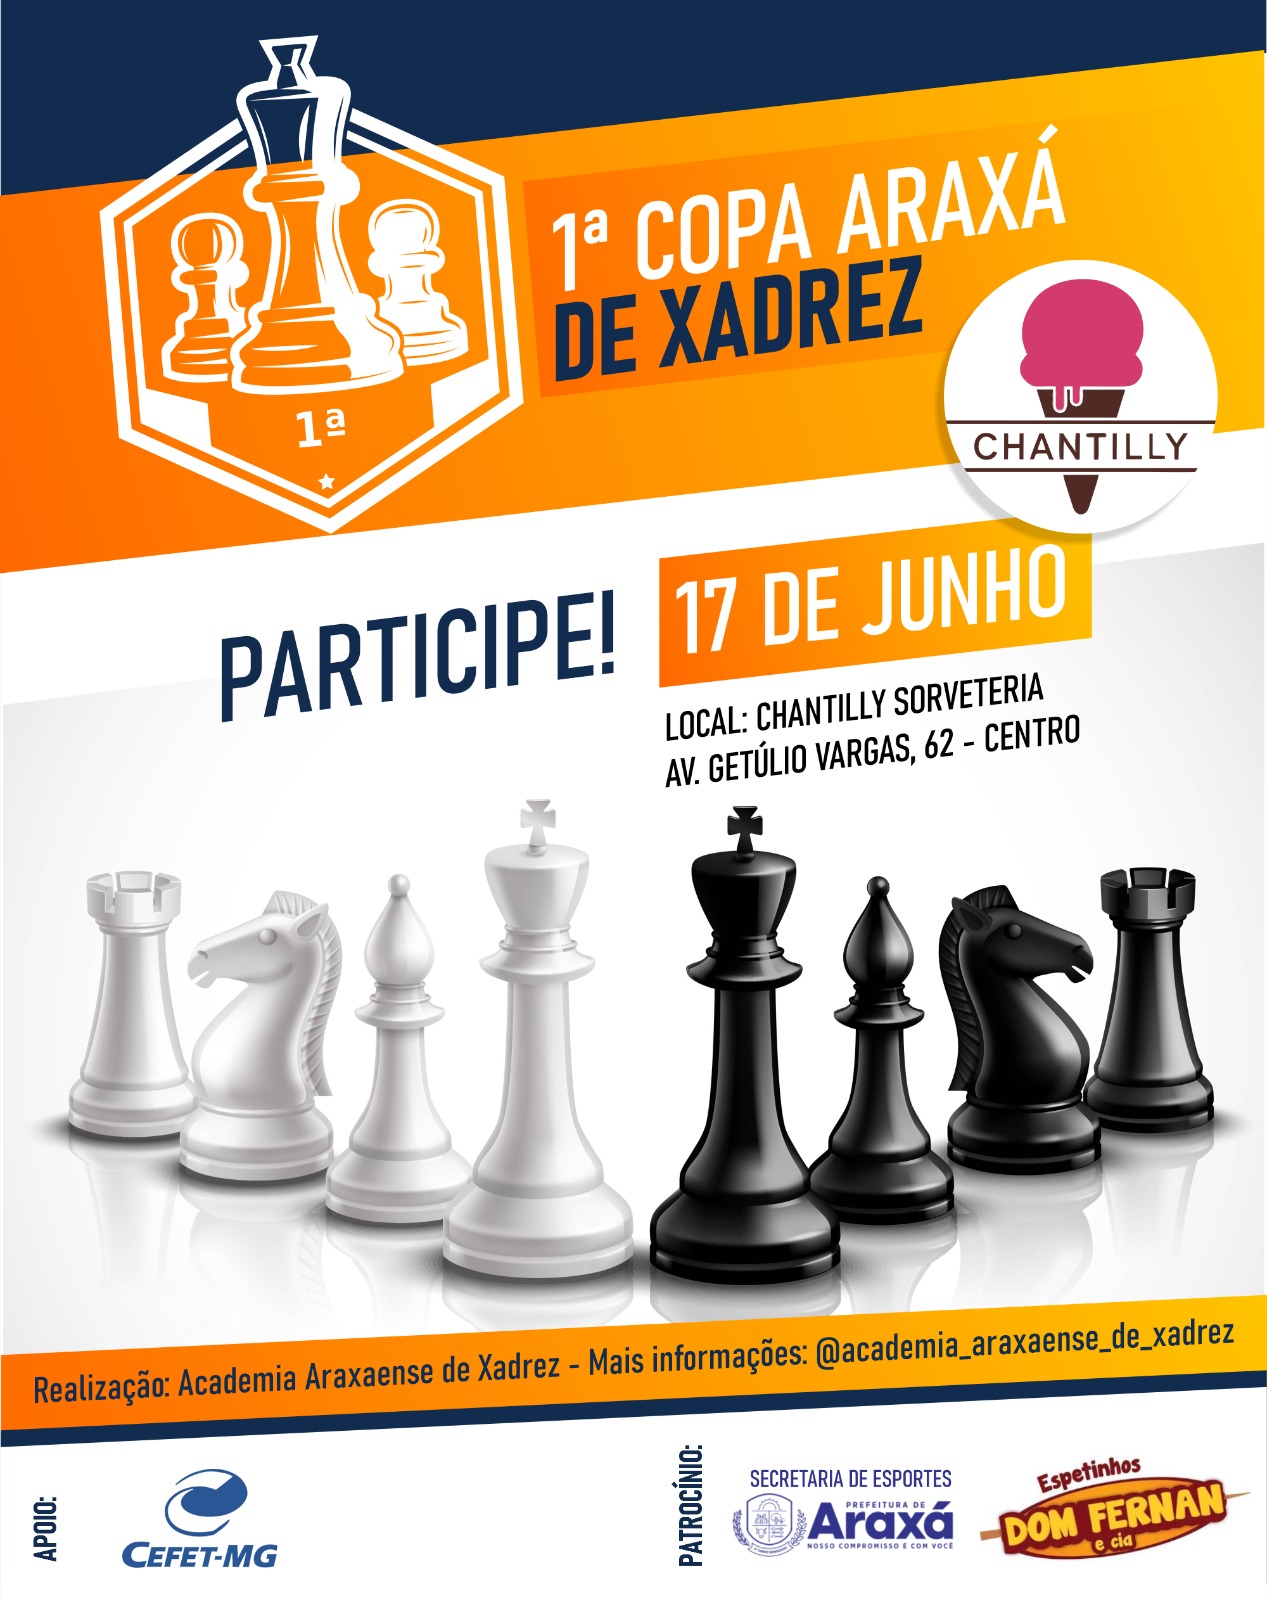 Xadrez: Match Campeonato Mundial 2° rodada ao vivo.